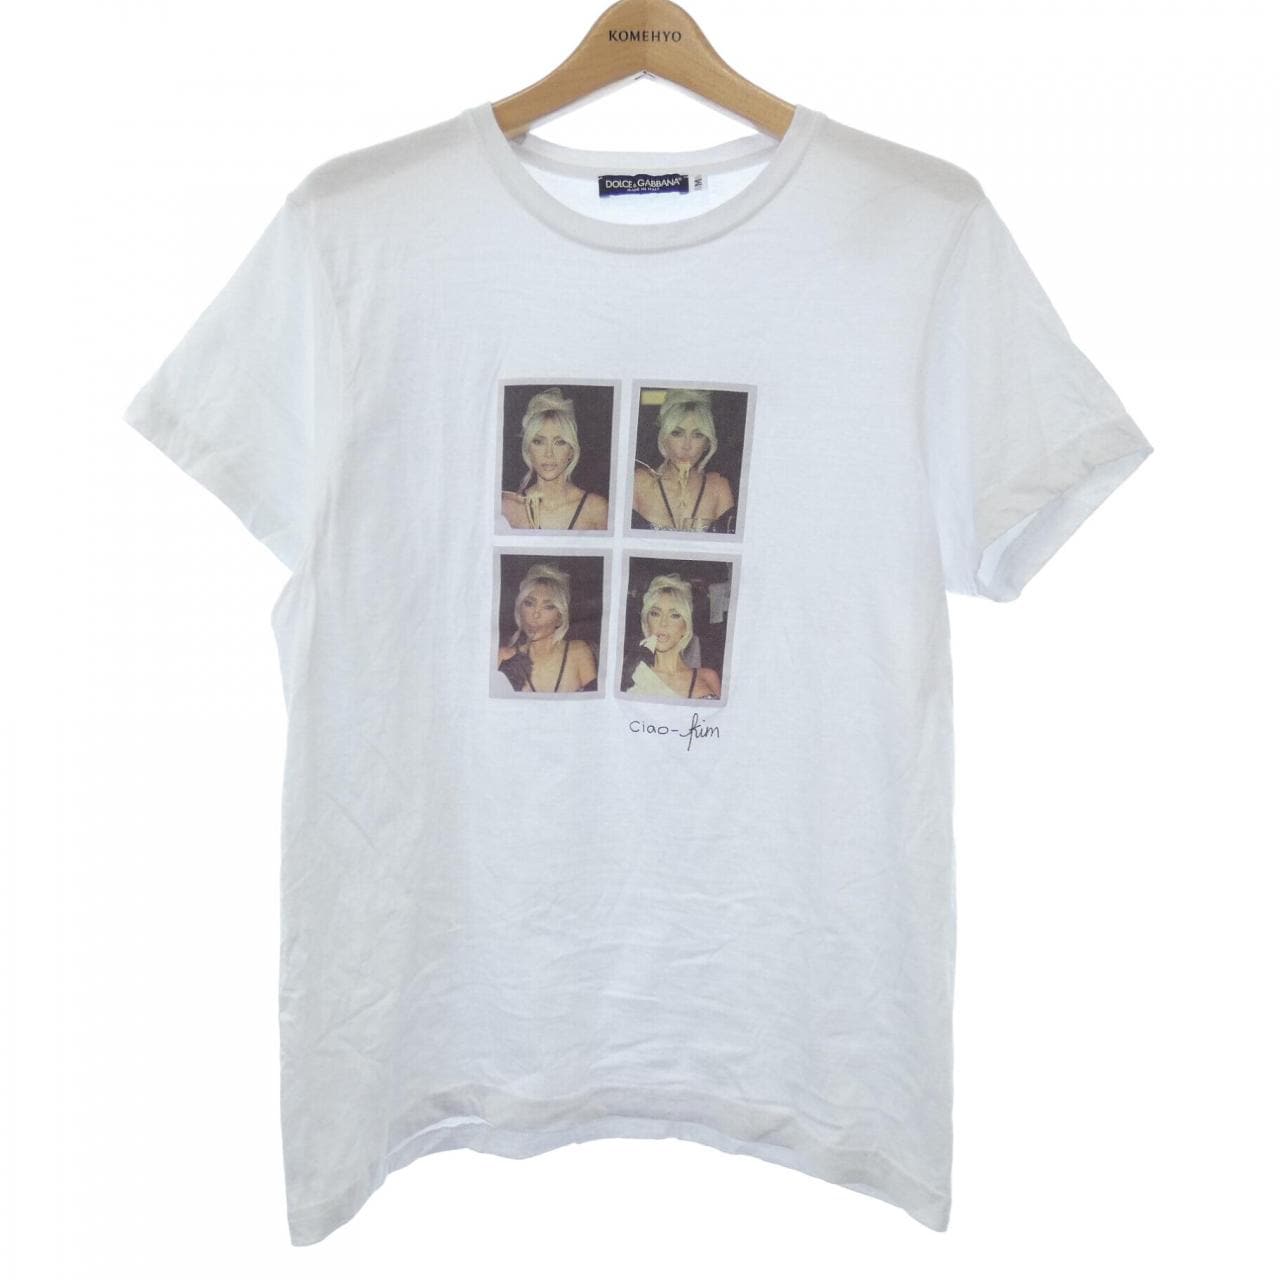 DOLCE&GABBANA Tシャツ　メンズ